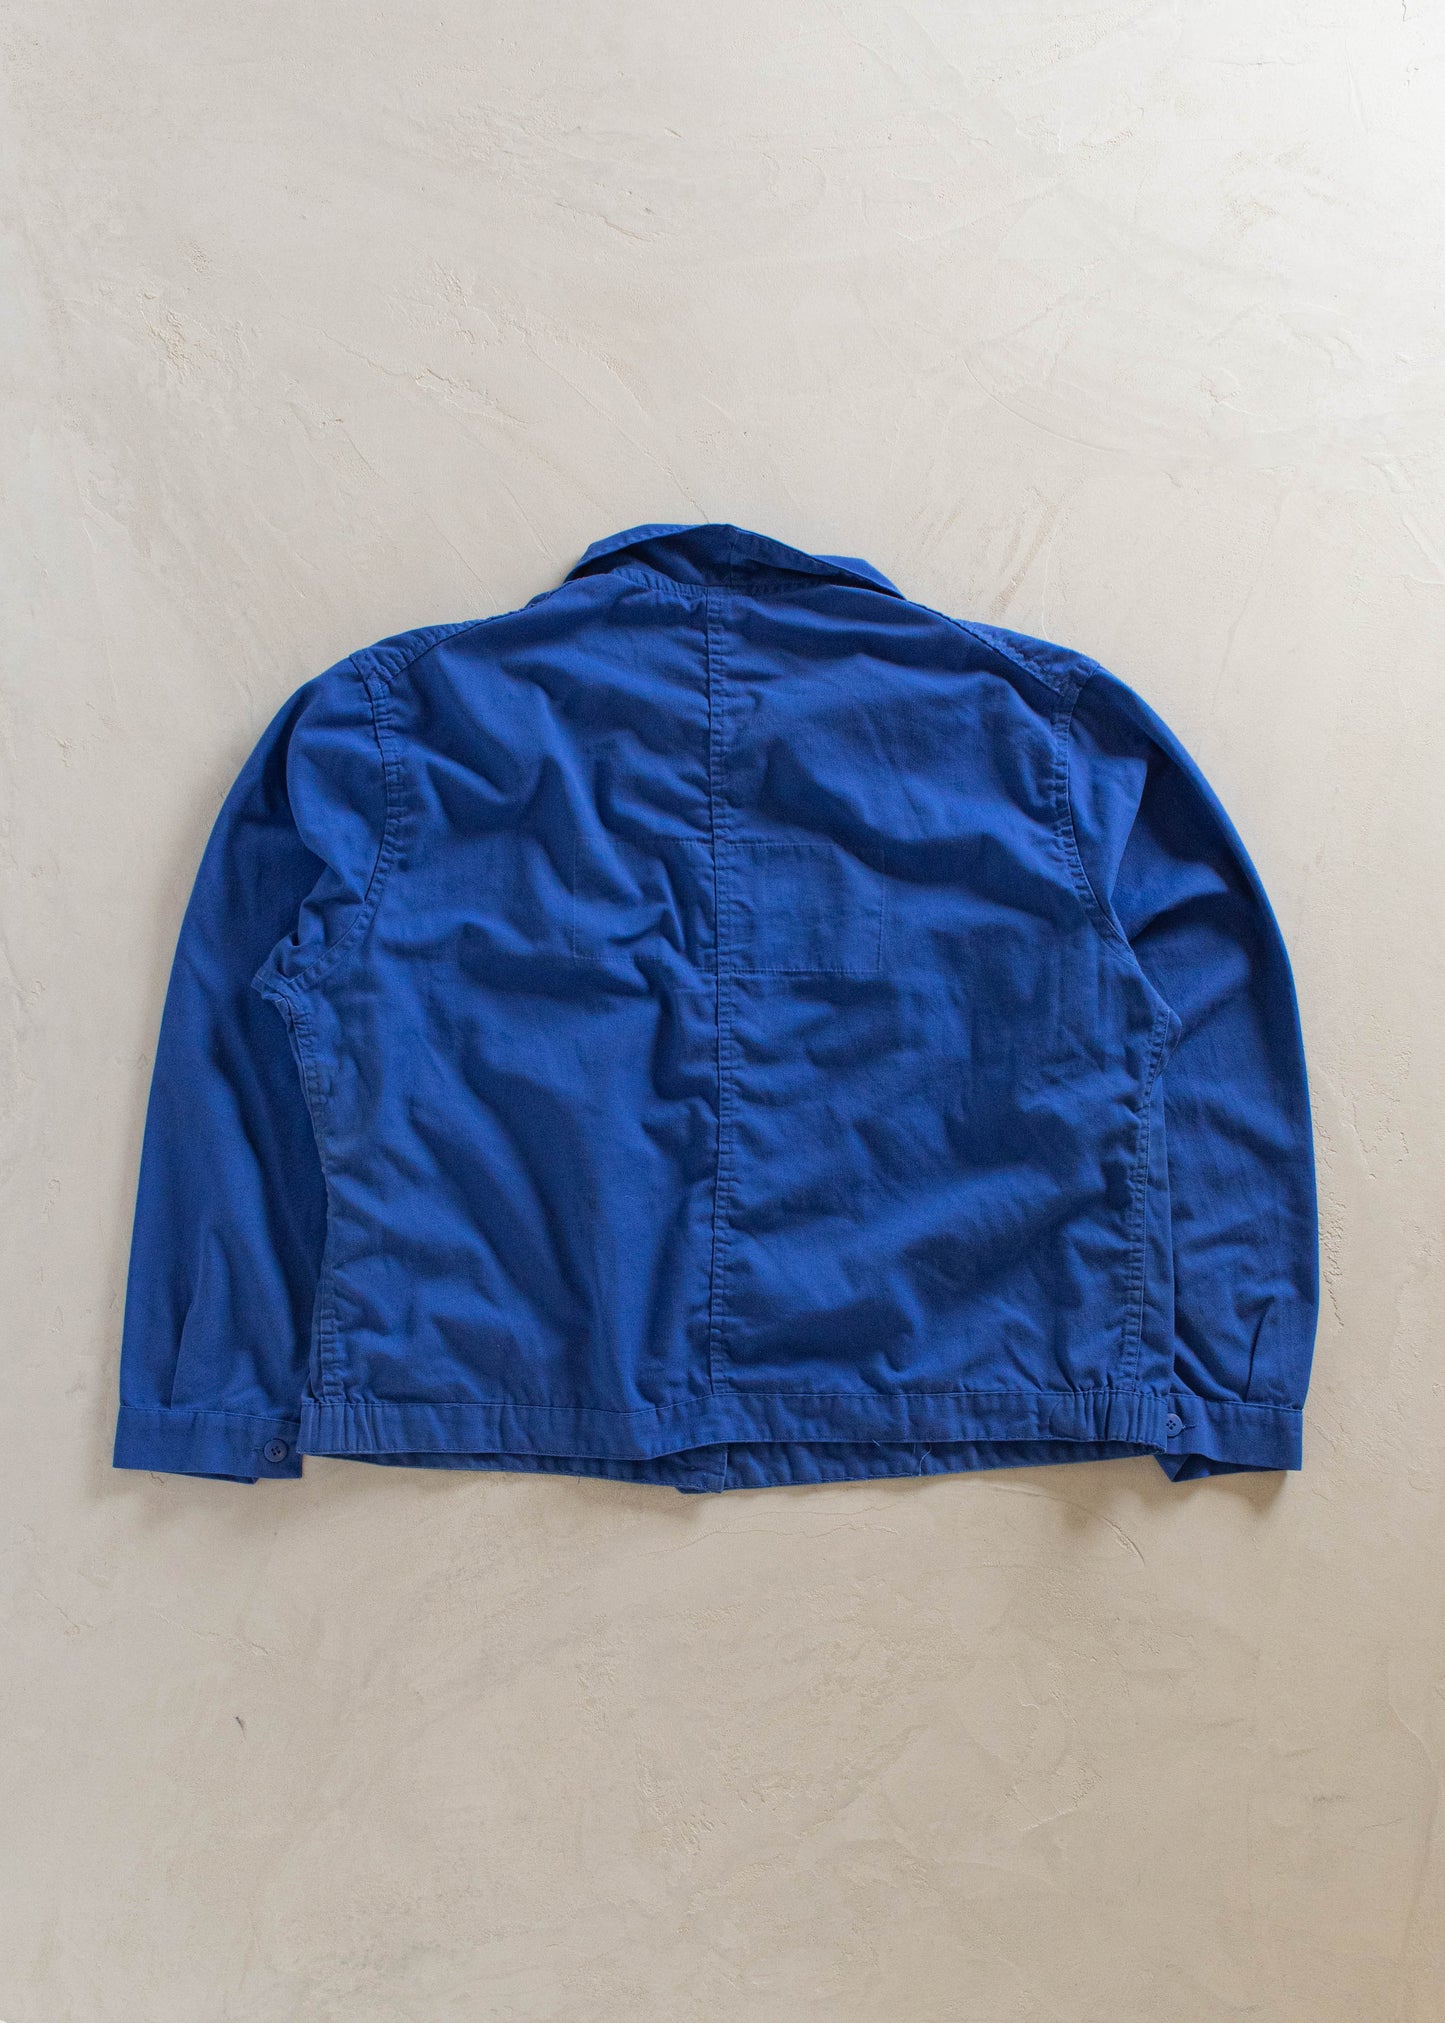 1980s Tergal European Workwear Zip Up Chore Jacket Size 2XL/3XL